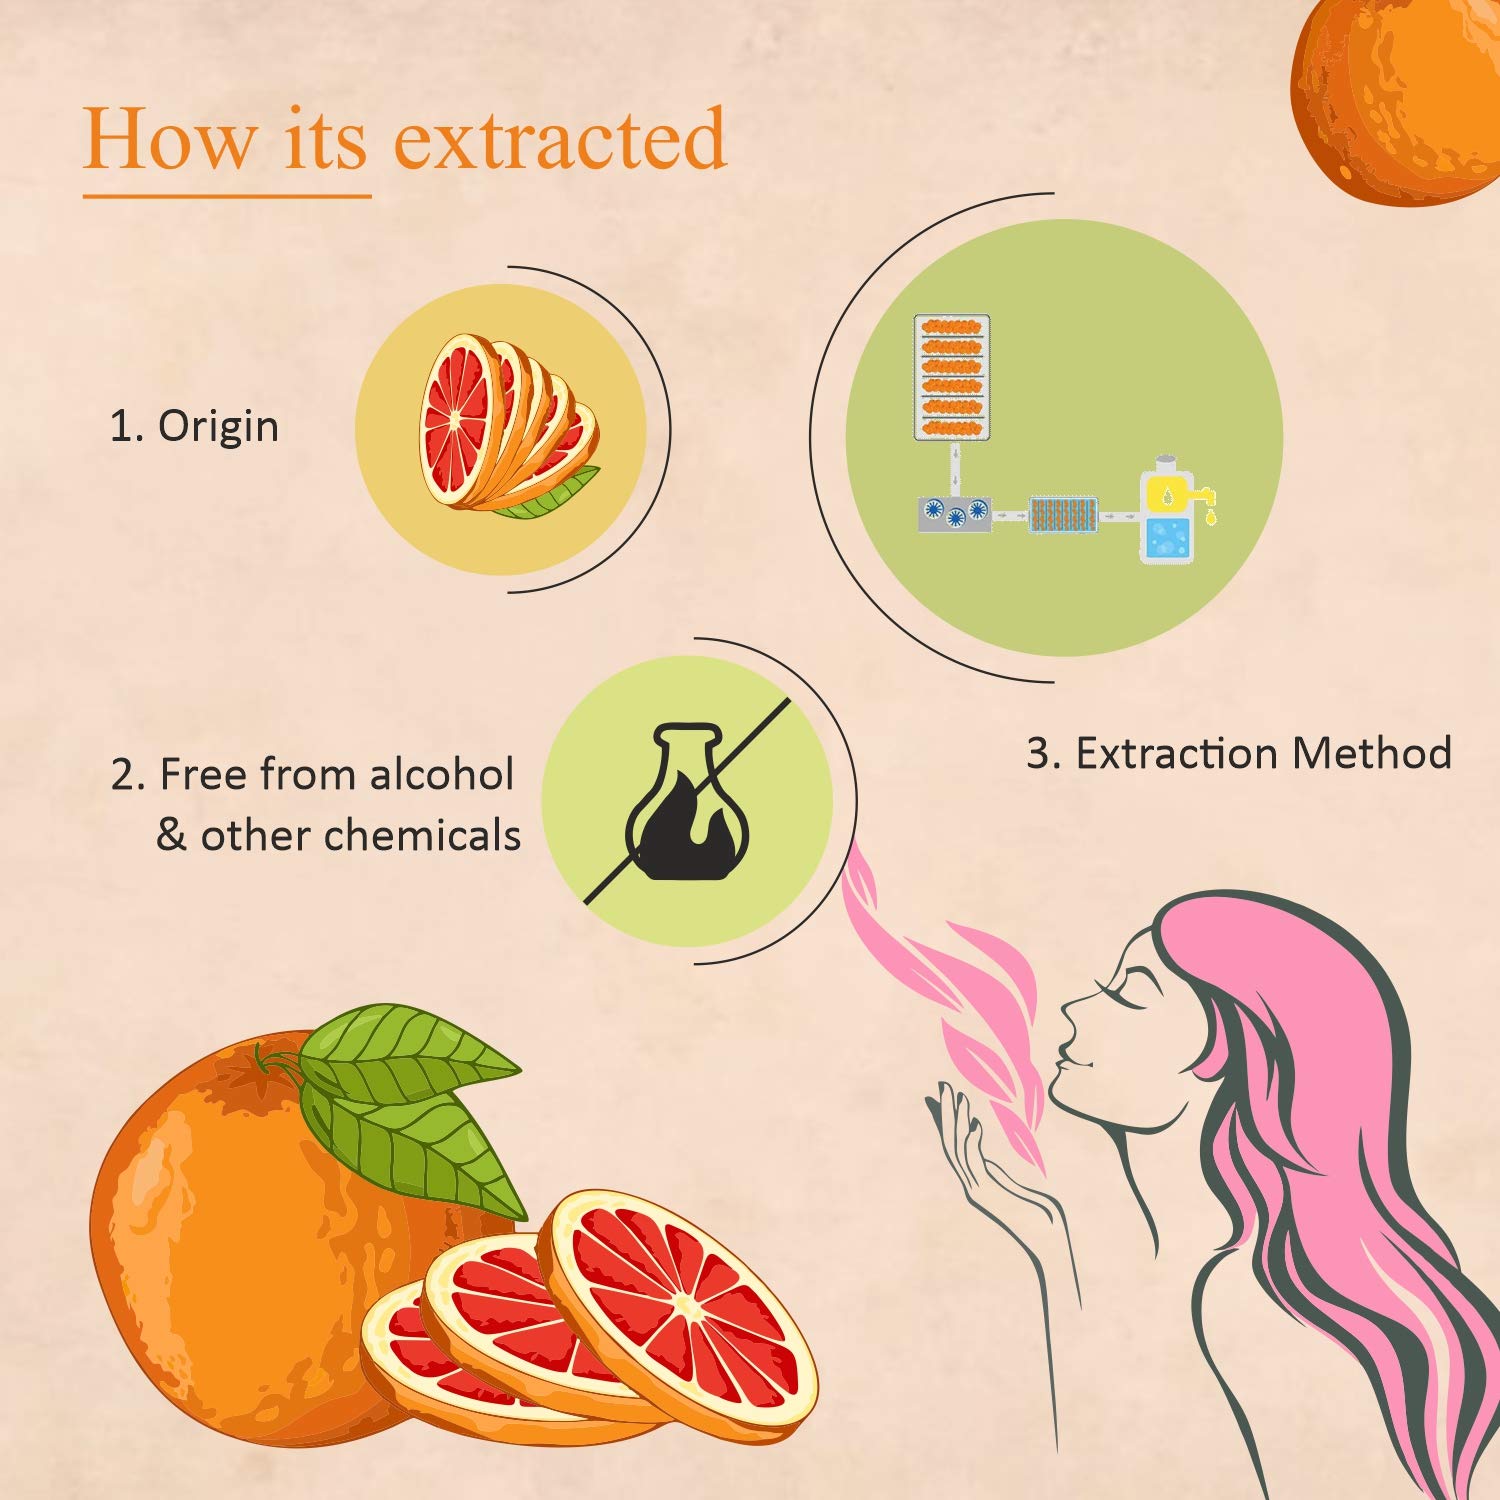 Florona Grapefruit Essential Oil 100% Pure & Natural - 4 fl oz, Therapeutic Grade for Hair, Face & Skin Care, Diffuser Aromatherapy, Massage